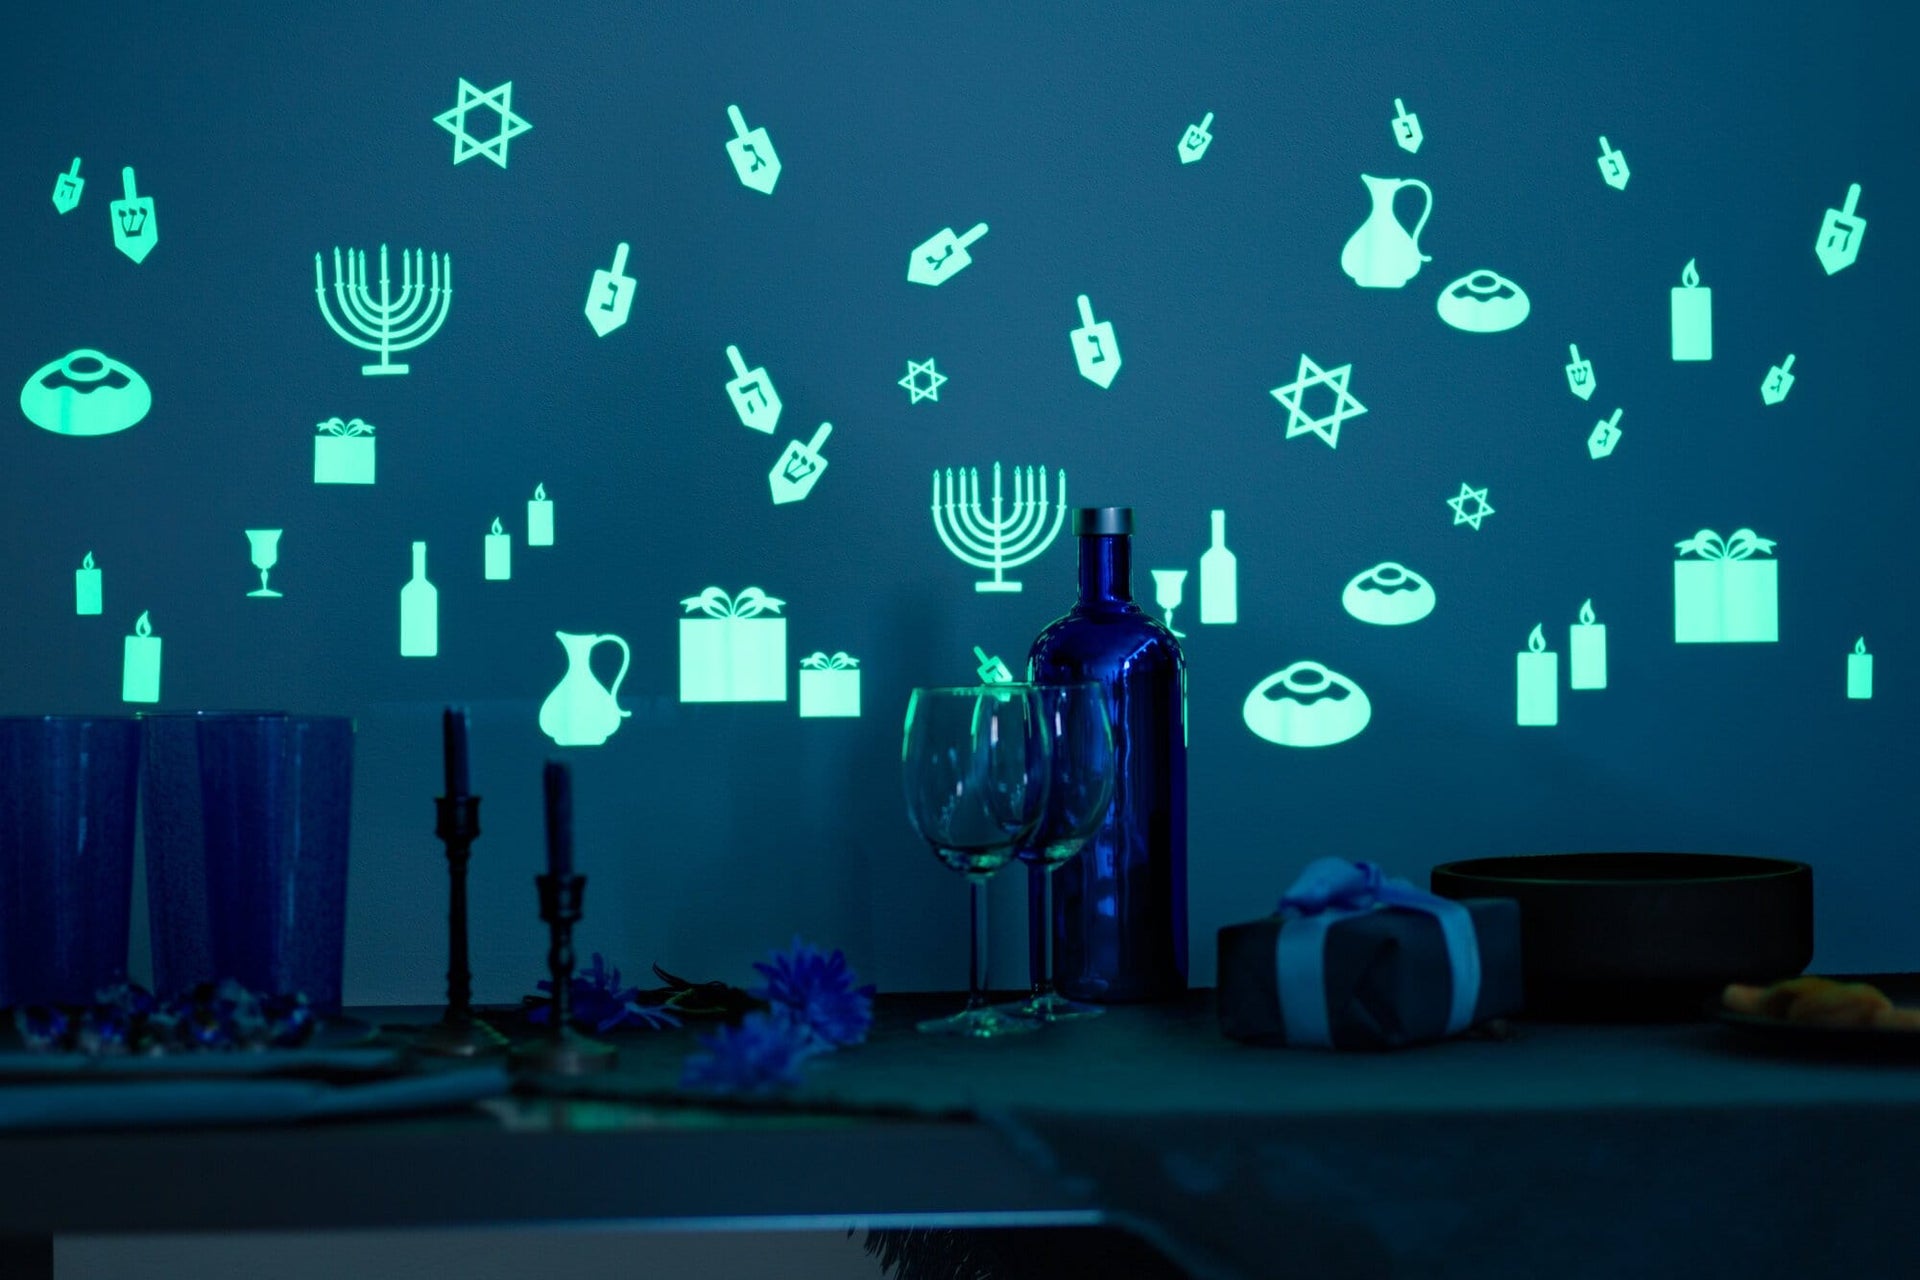 The KitCut Decorations Hanukkah Gloplay Decals - Set of 27